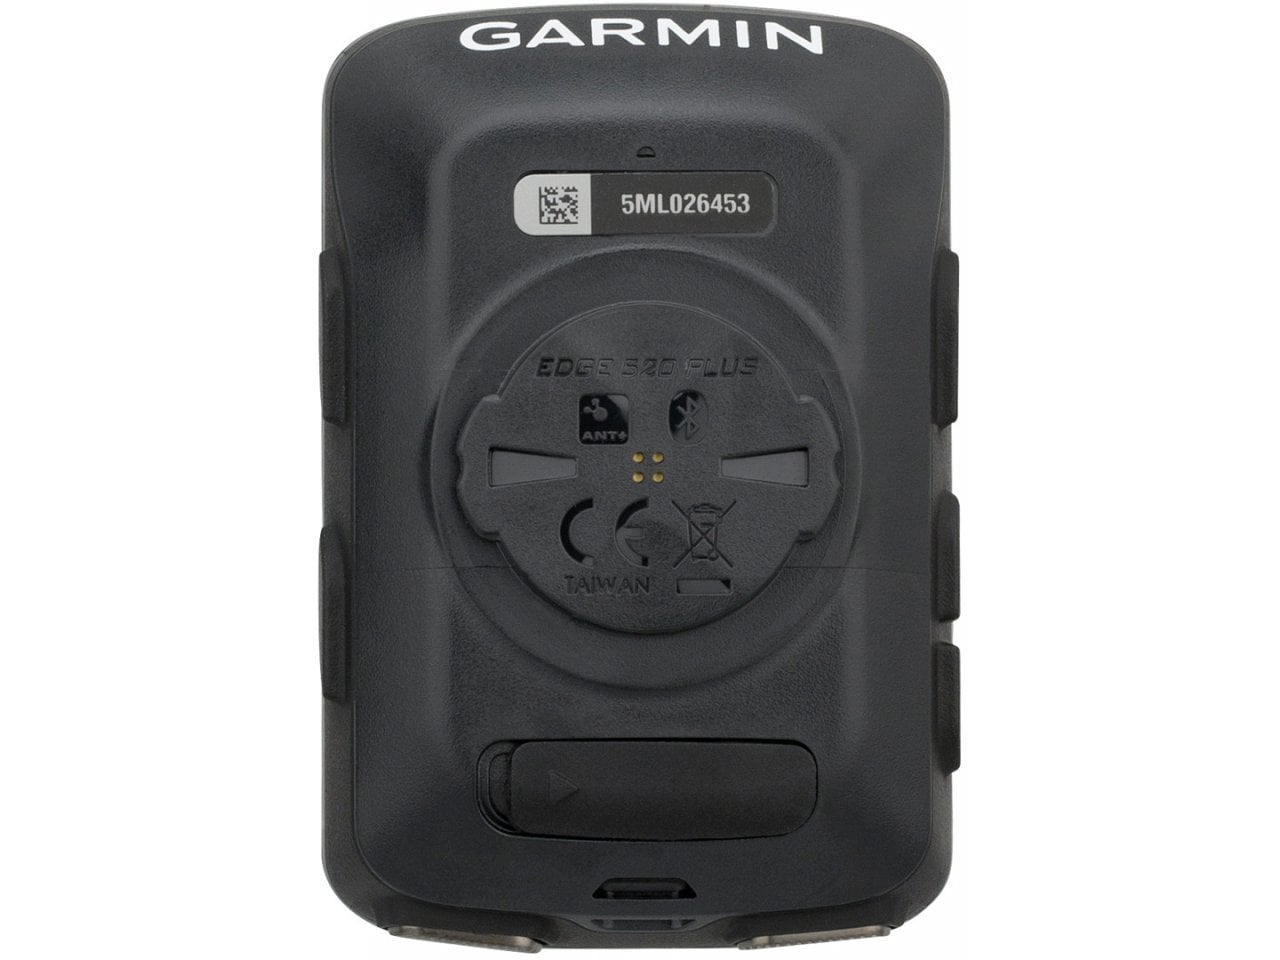 Garmin 520 Plus. Garmin Edge 520 Plus GPS Bundle. Велокомпьютер с навигатором. +Garmin +Edge +520 +Plus +GPS +MTB +Bundle купить.